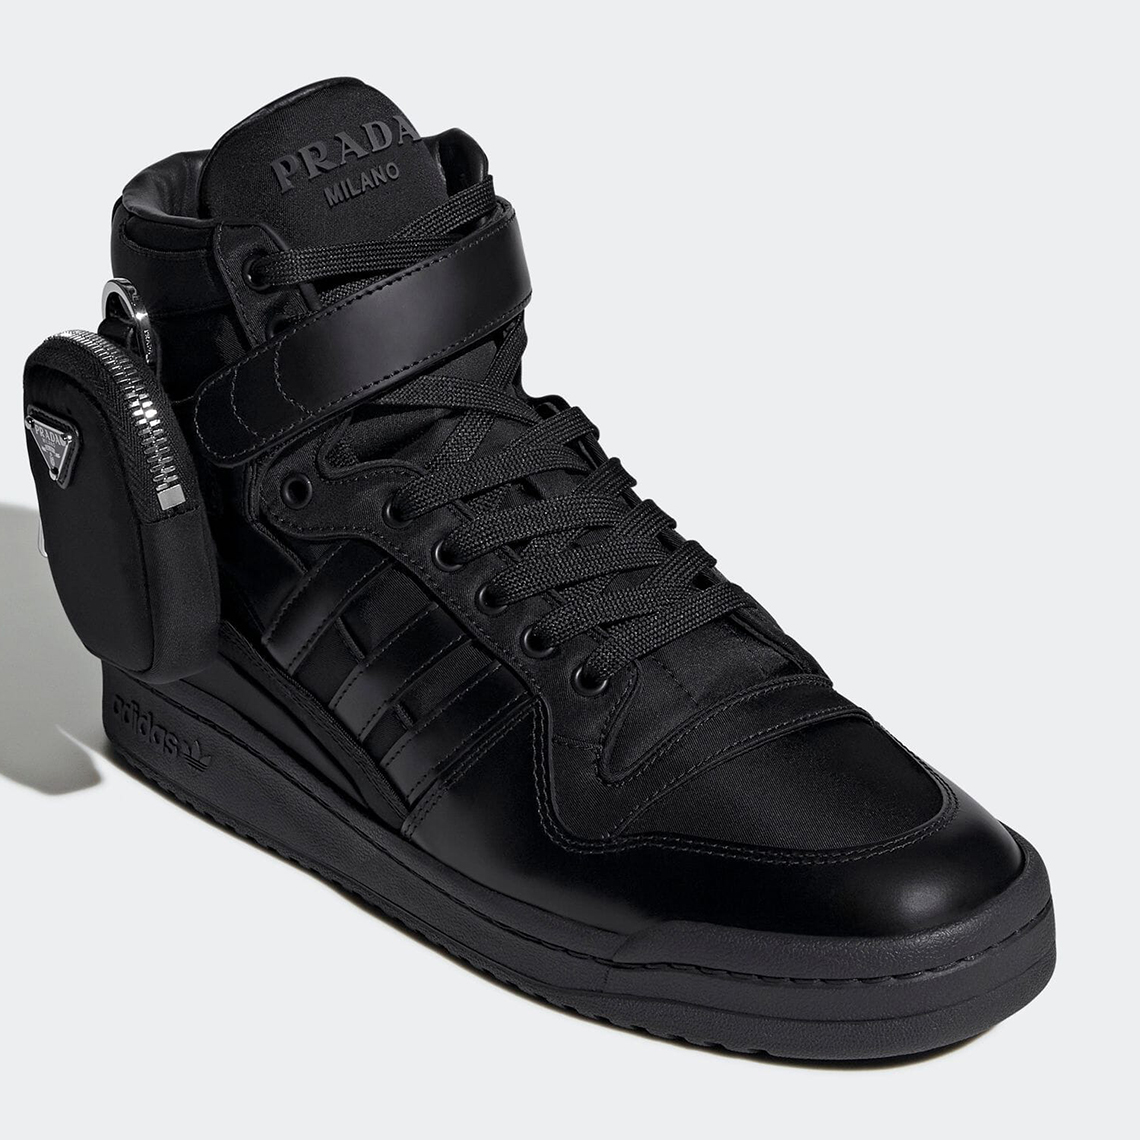 Prada For Adidas Forum Hi Re Nylon Core Black Gy7040 7